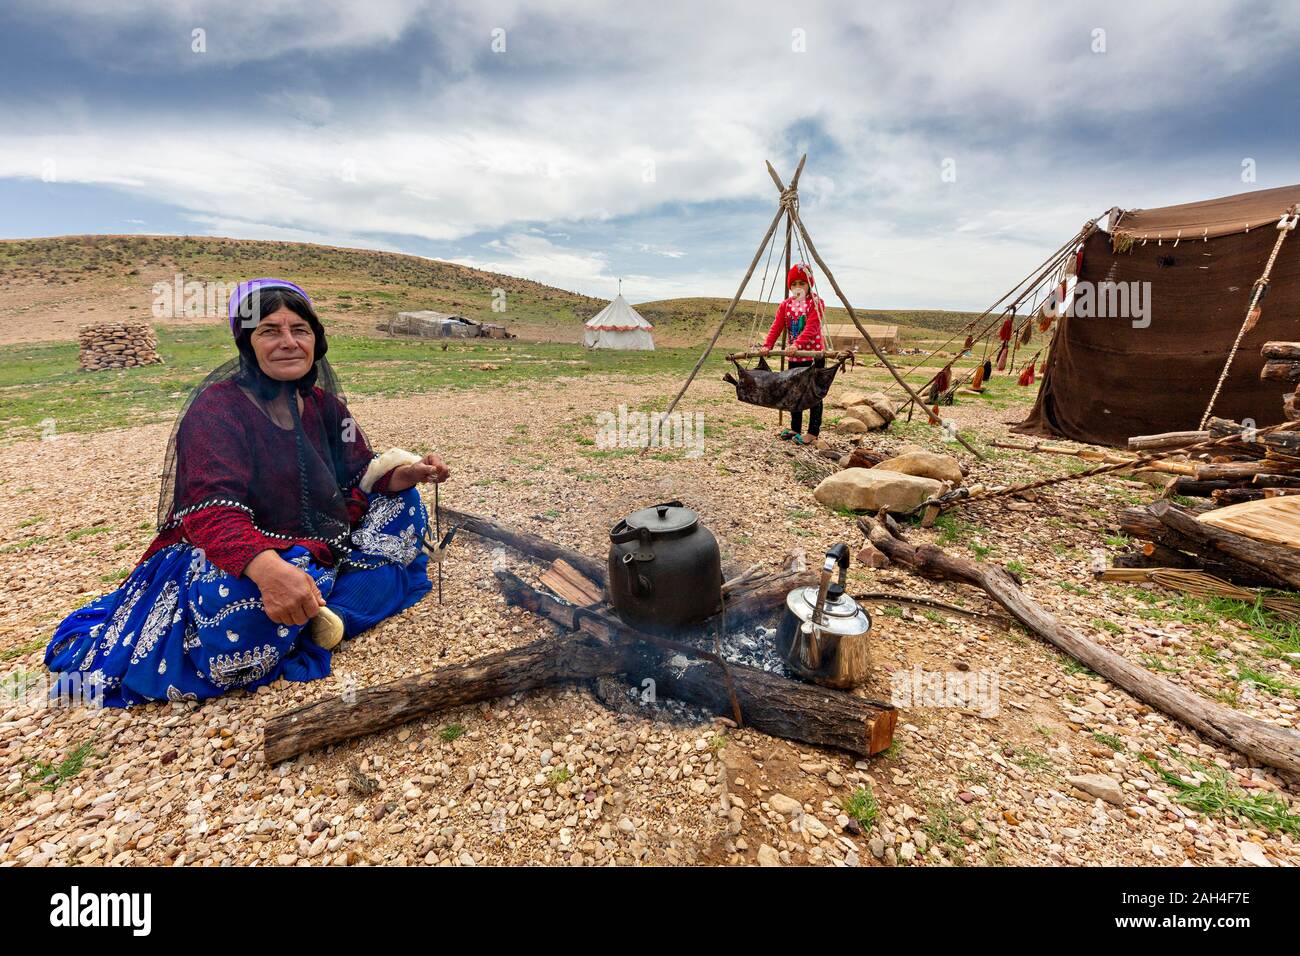 Nomadic woman from Qashqai nomads spins wool and makes tea, near Shiraz, Iran. Stock Photo